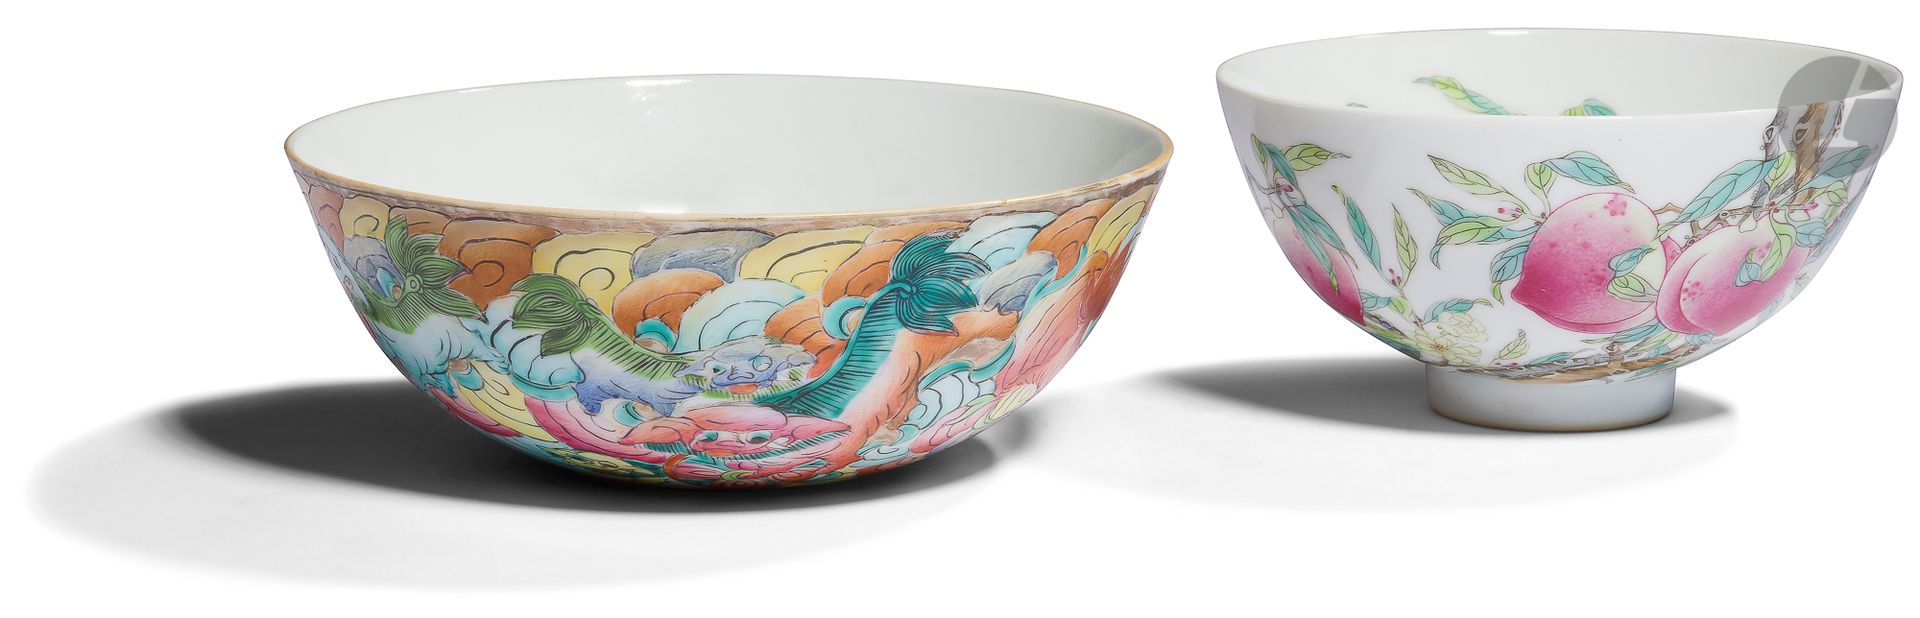 Null 瓷碗两件，
中国彩绘蝙蝠、寿桃和云间石
。
 
直径：13.4和16.8厘米
拍品由波蒂埃公司提供